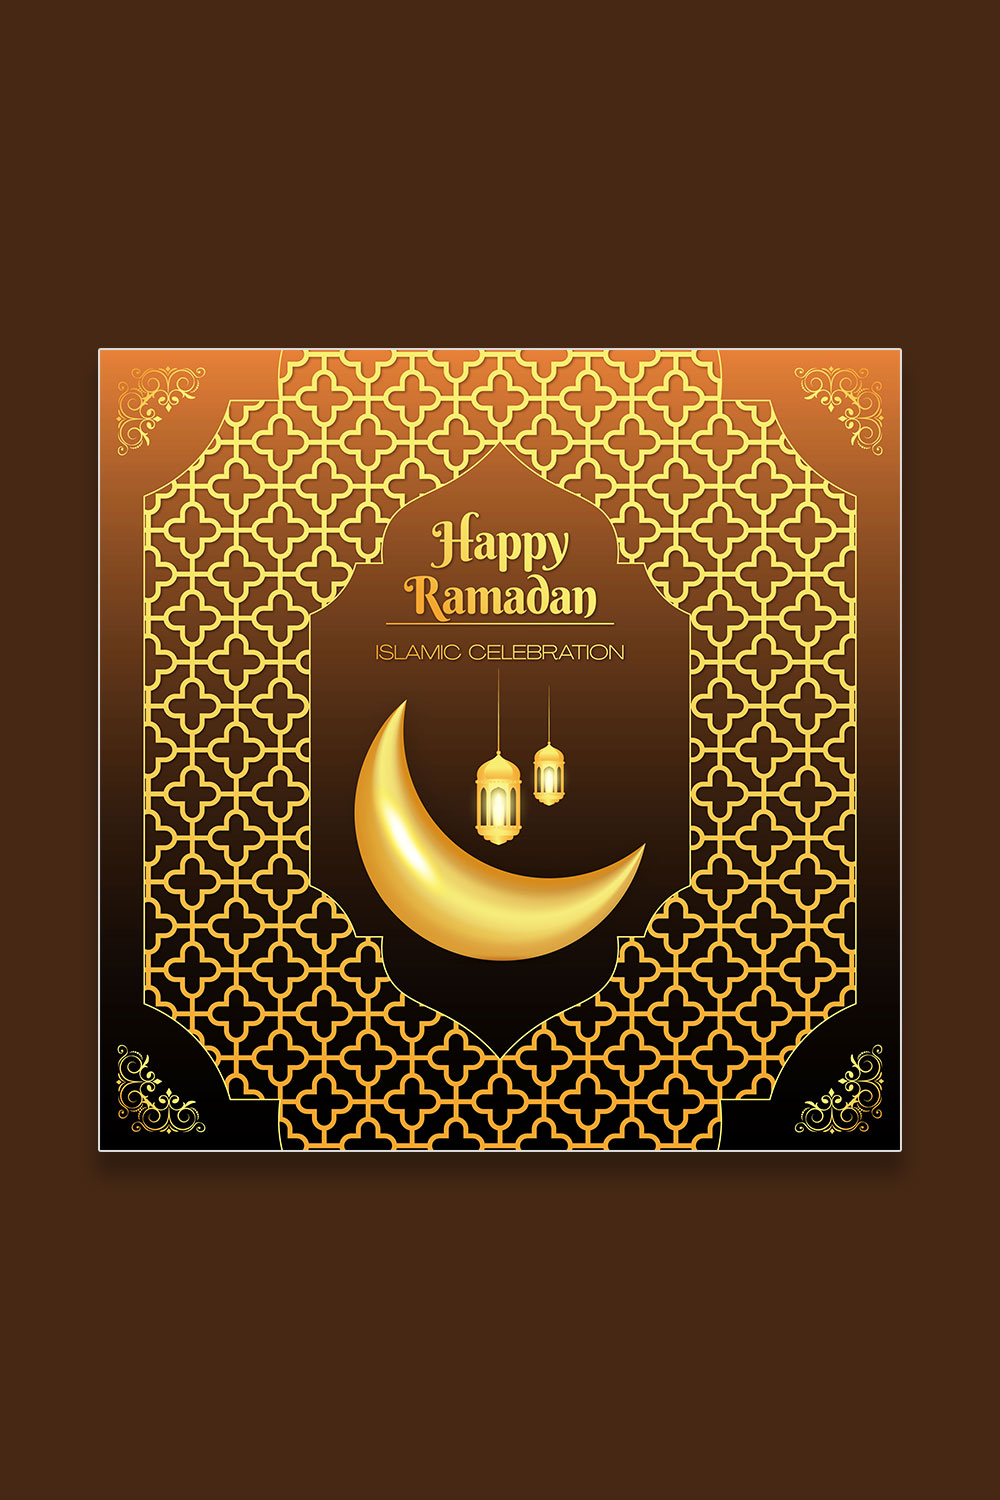 Ramadan Kareem greeting card design with Islamic background pinterest preview image.